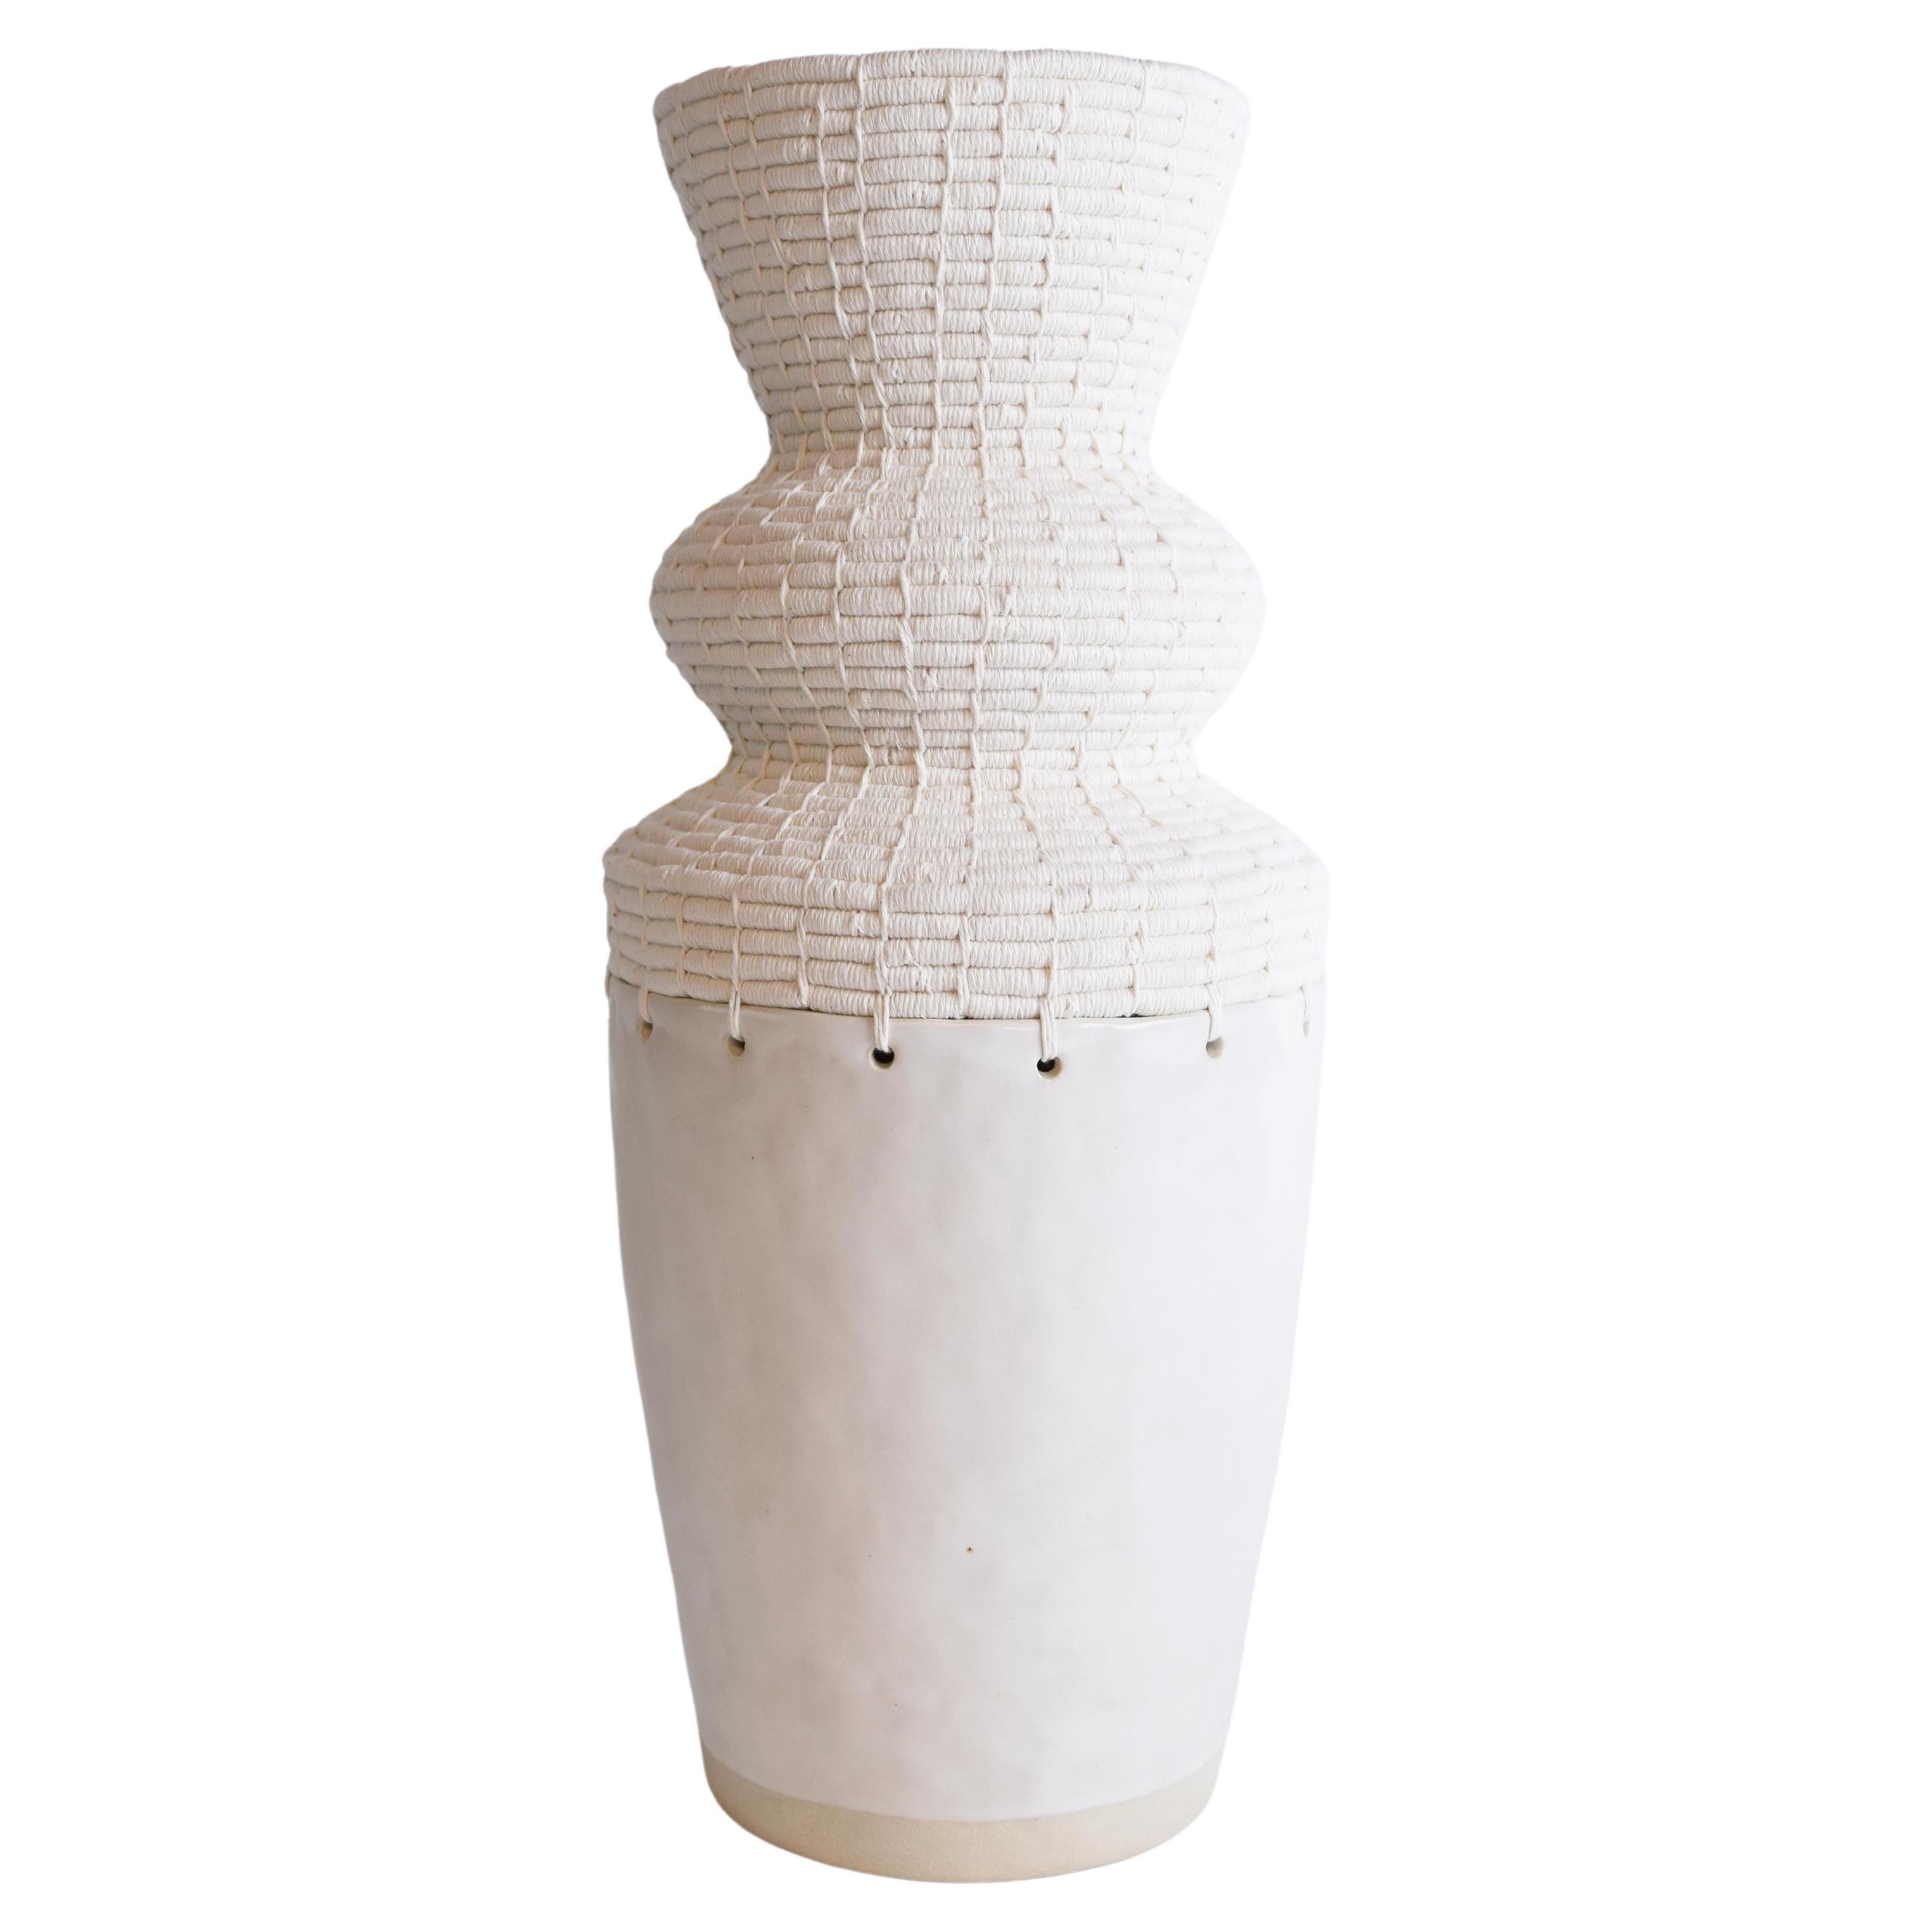 One of a Kind Handmade Ceramic Vessel #784, White Glaze, Woven White Cotton